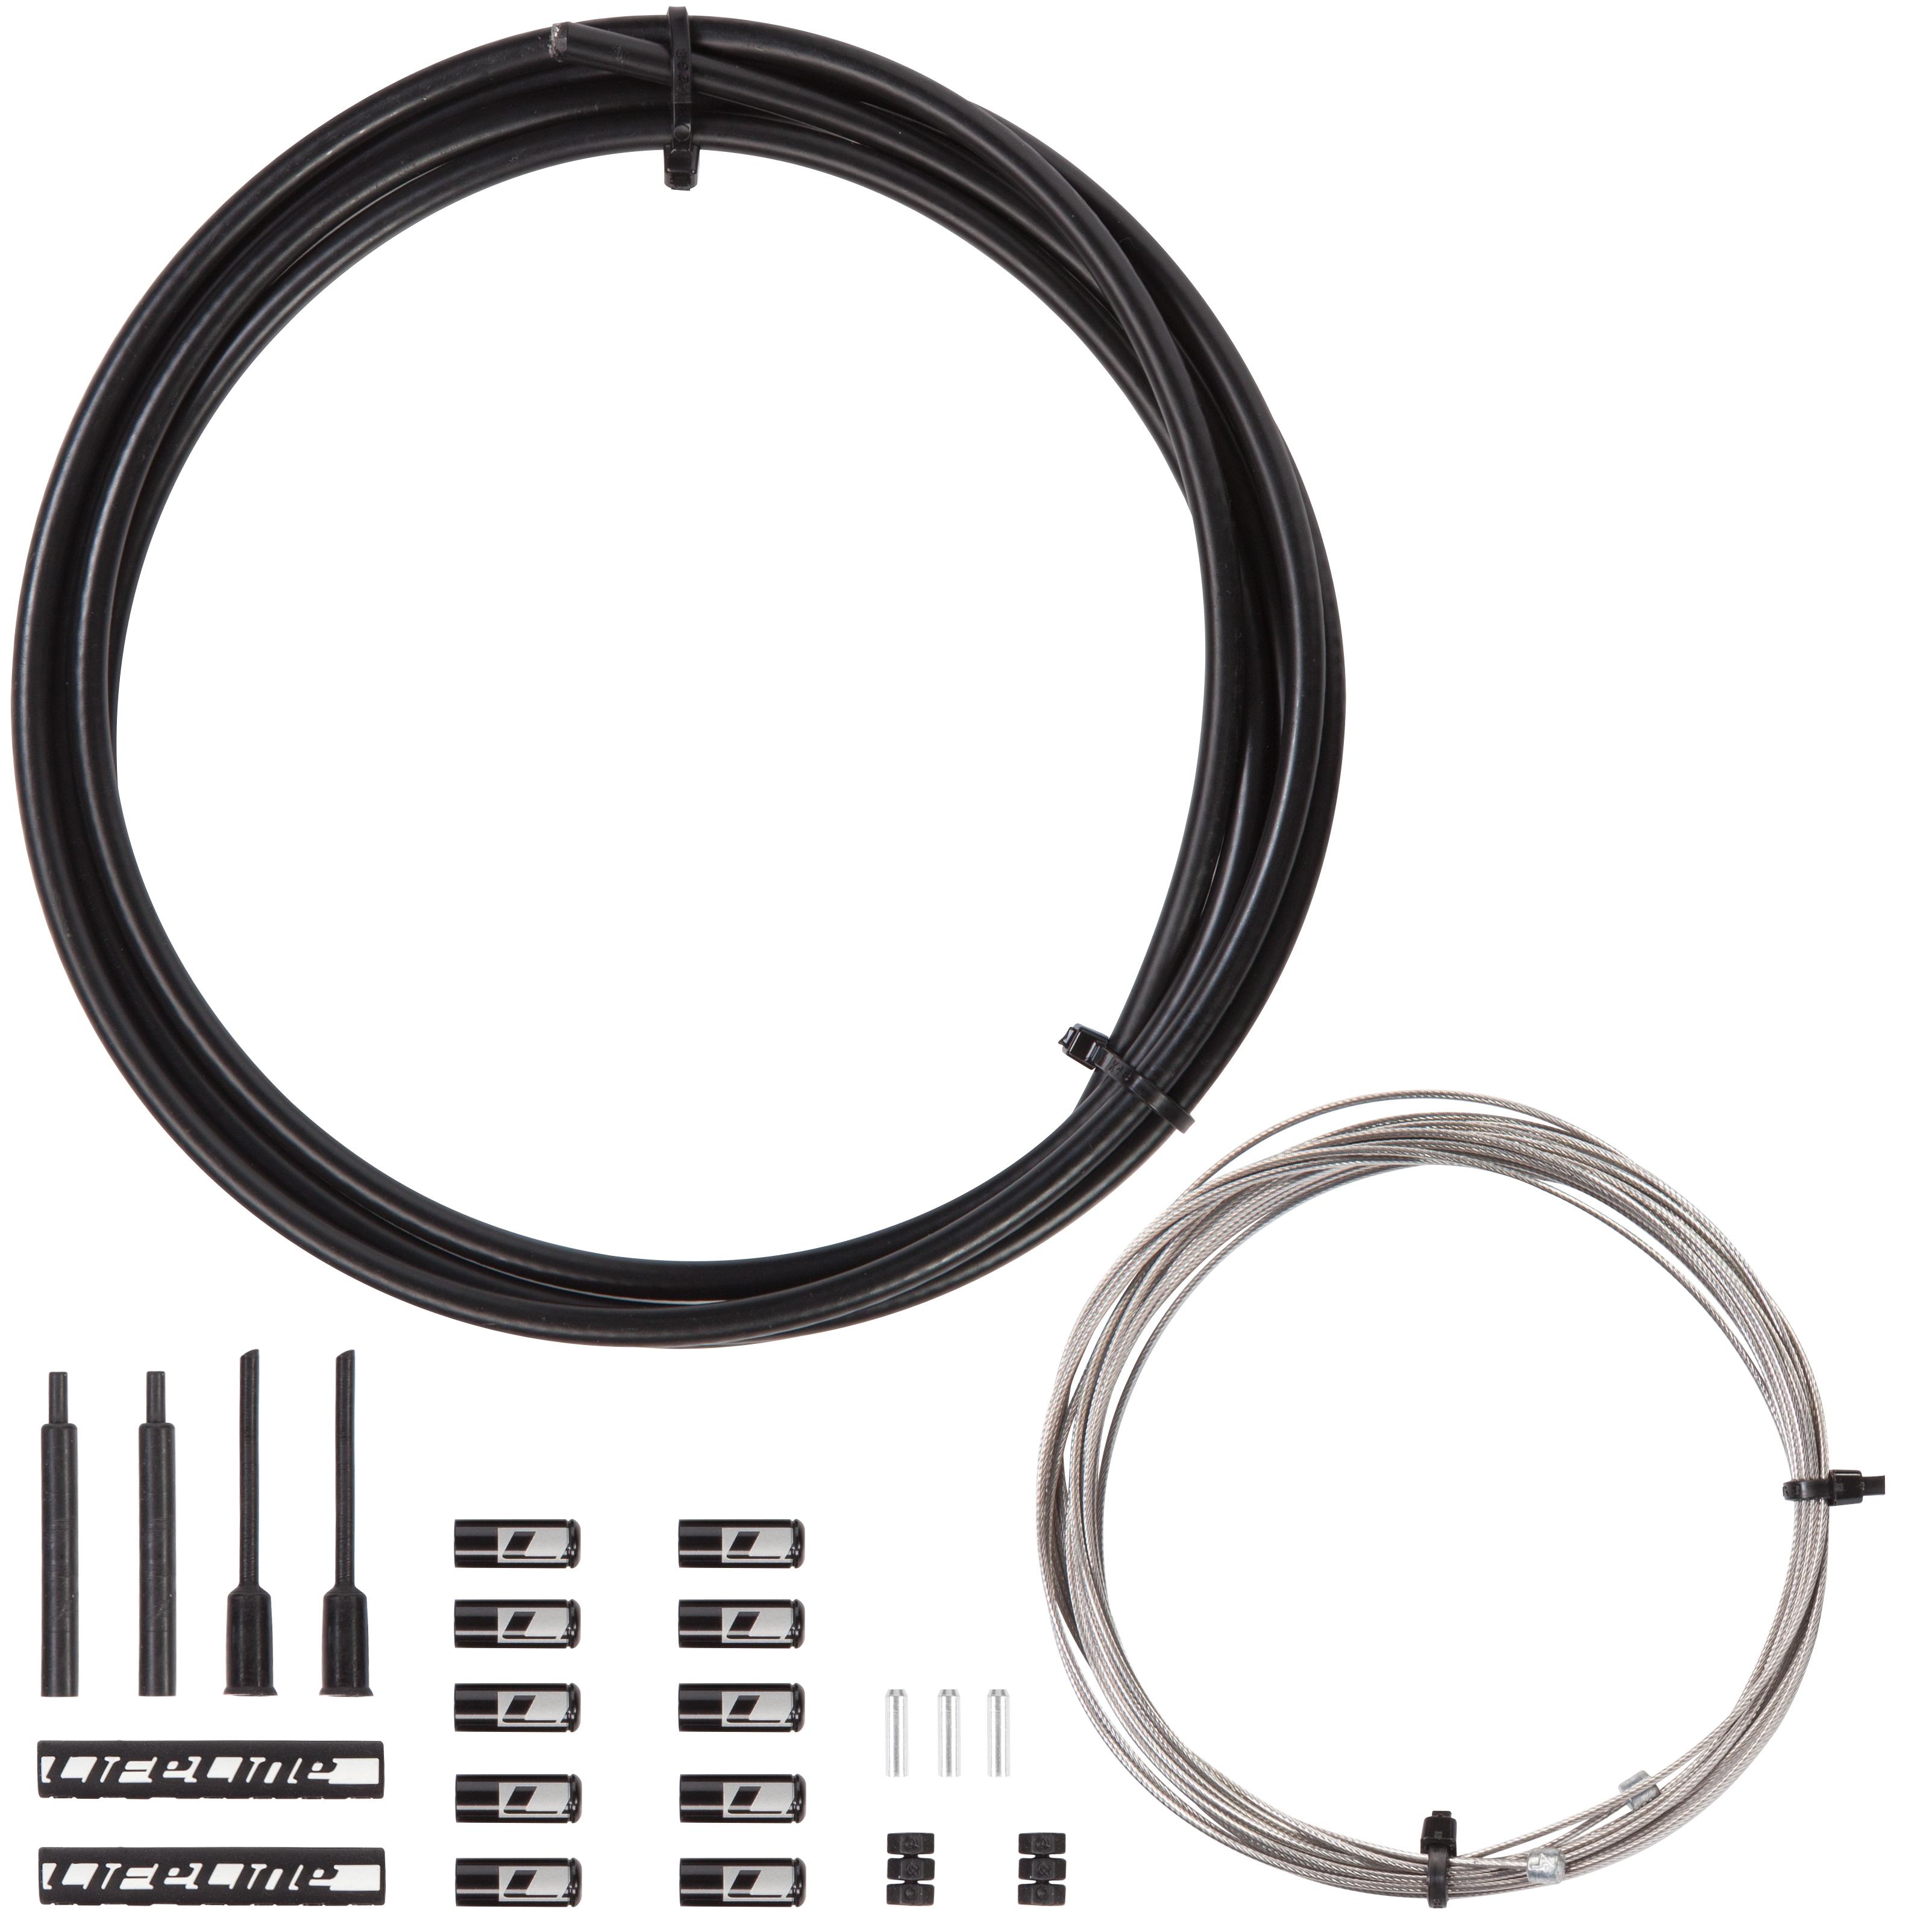 Lifeline Performance Gear Cable Set - Shimano/sram - Black